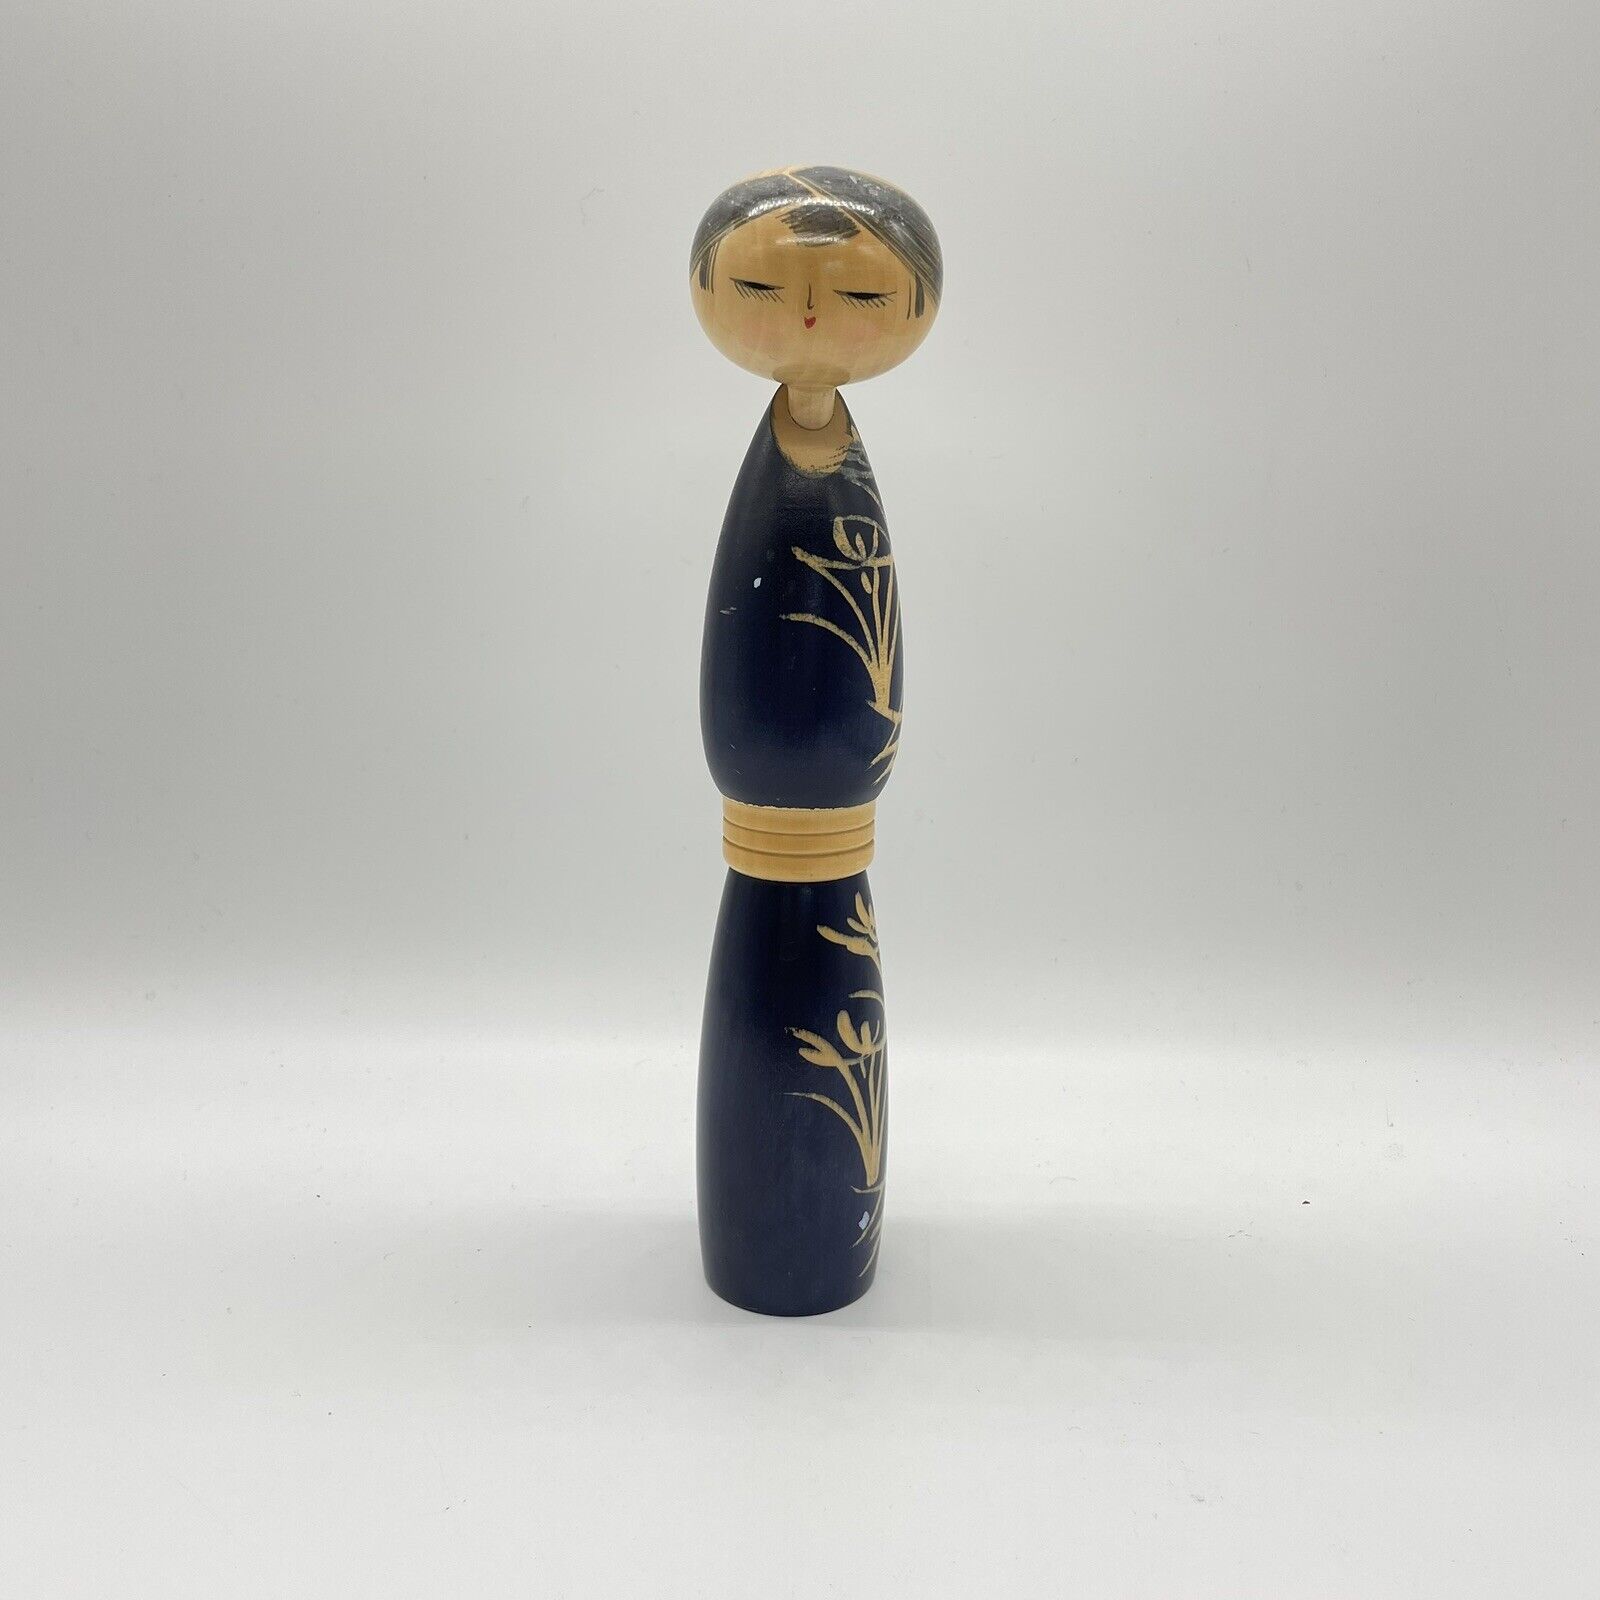 Tall Vintage Sosaku (Creative) kokeshi japanese wooden doll by Satou Suigai K124